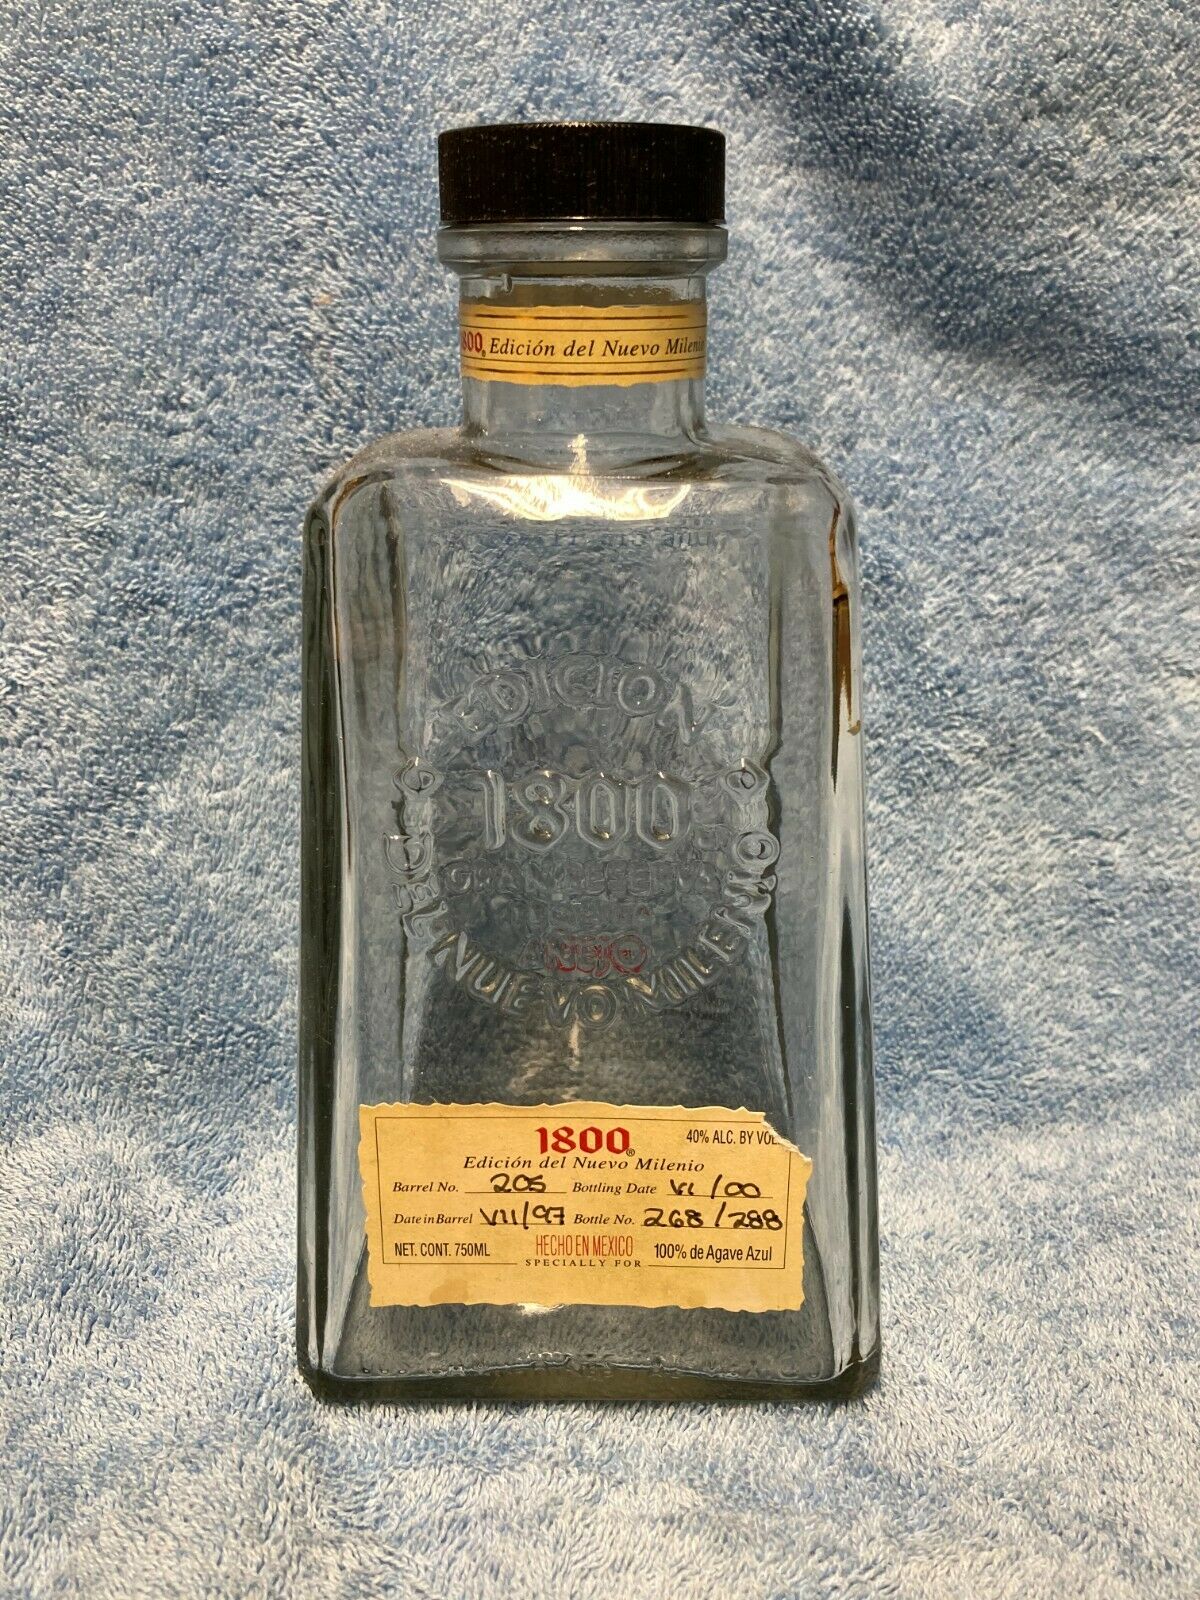 1800 Del Nuevo Milenio Gran Reserva Añejo Tequila Limited Edition Numbered 1997